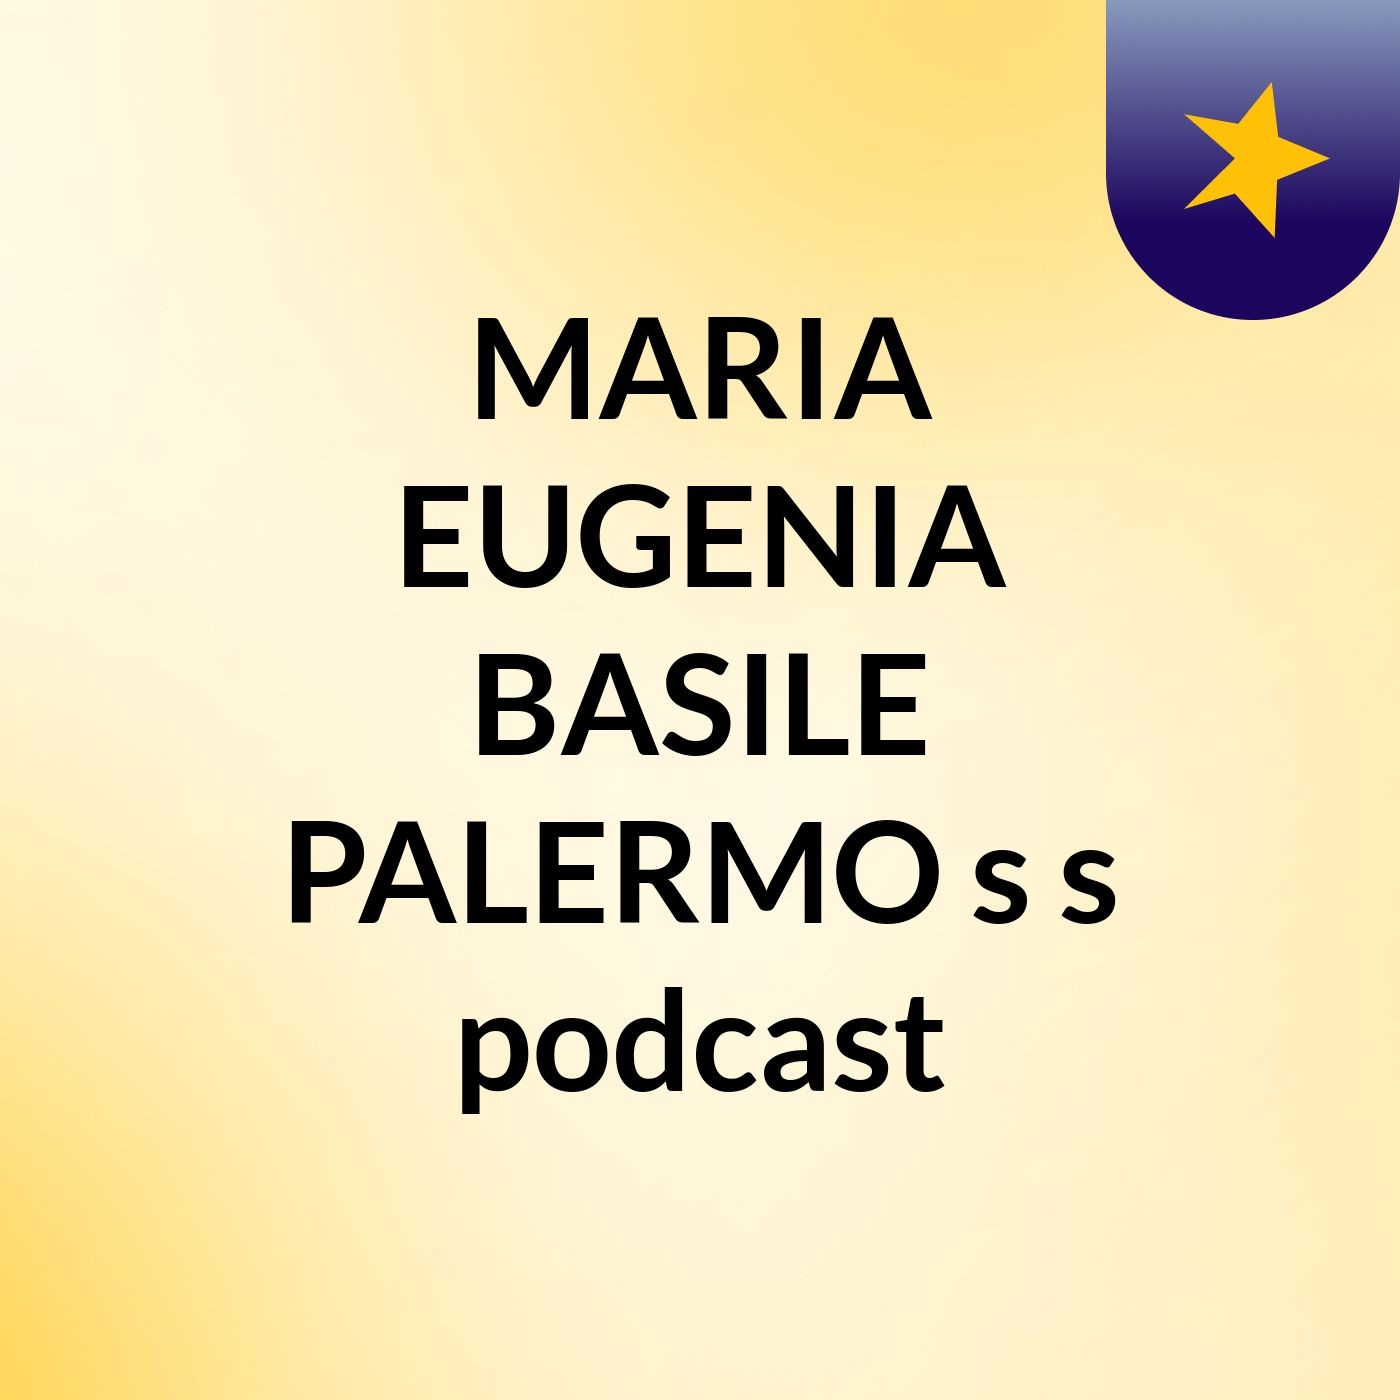 MARIA EUGENIA BASILE PALERMO s's podcast